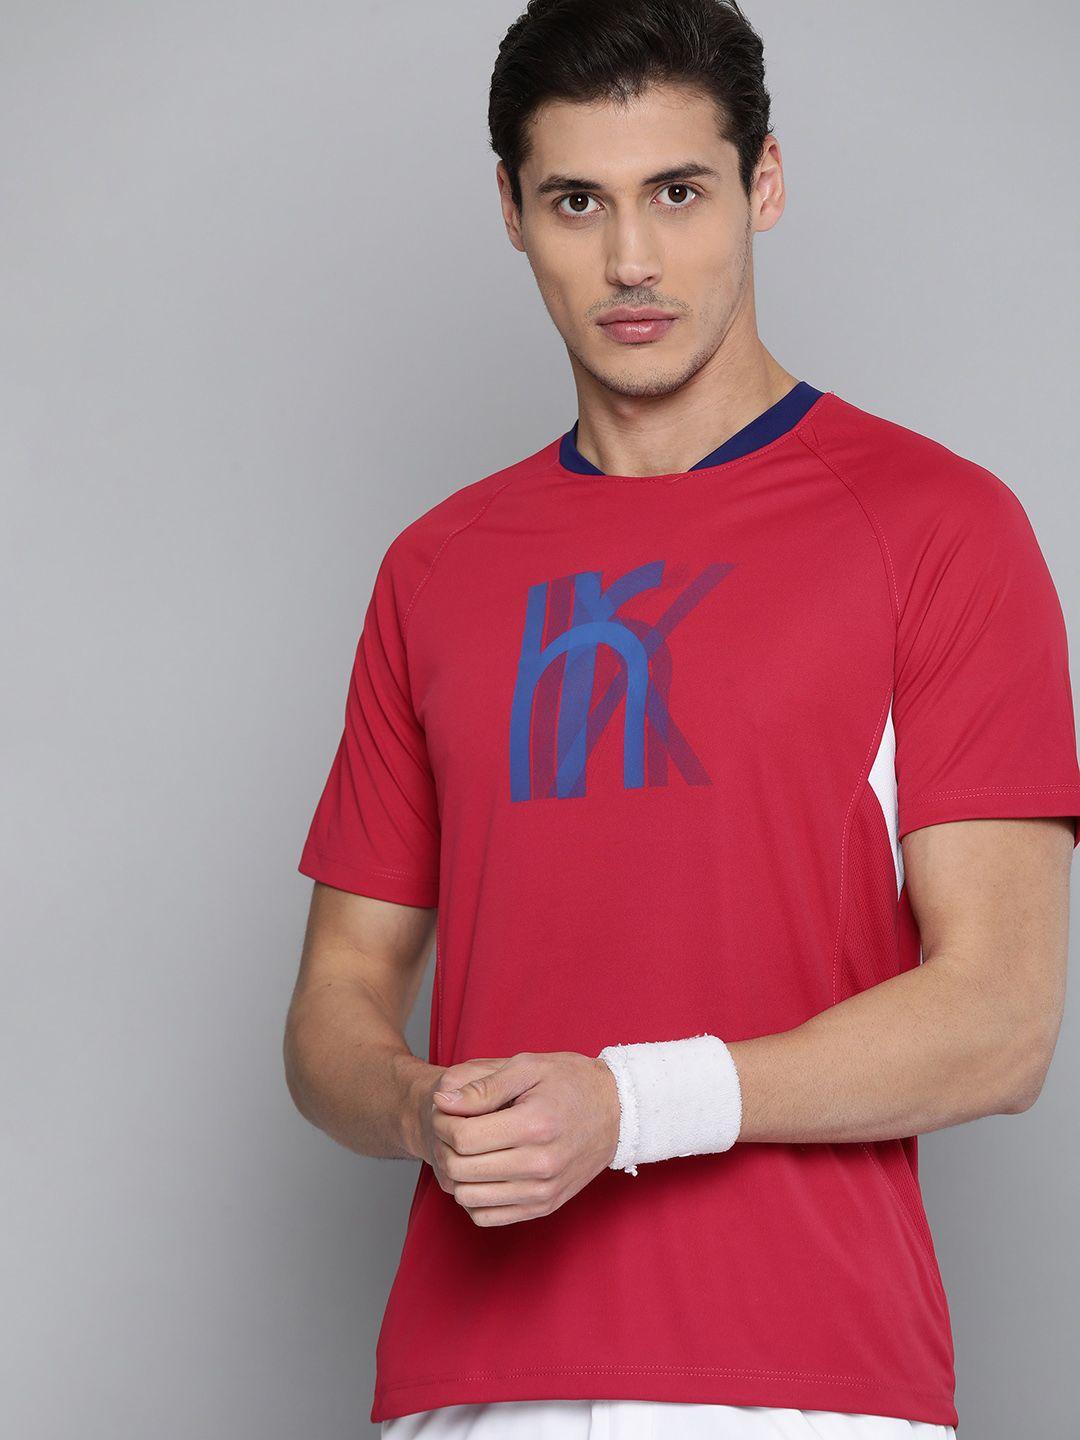 hrx by hrithik roshan racket sports men electric magenta rapid-dry brand carrier tshirt